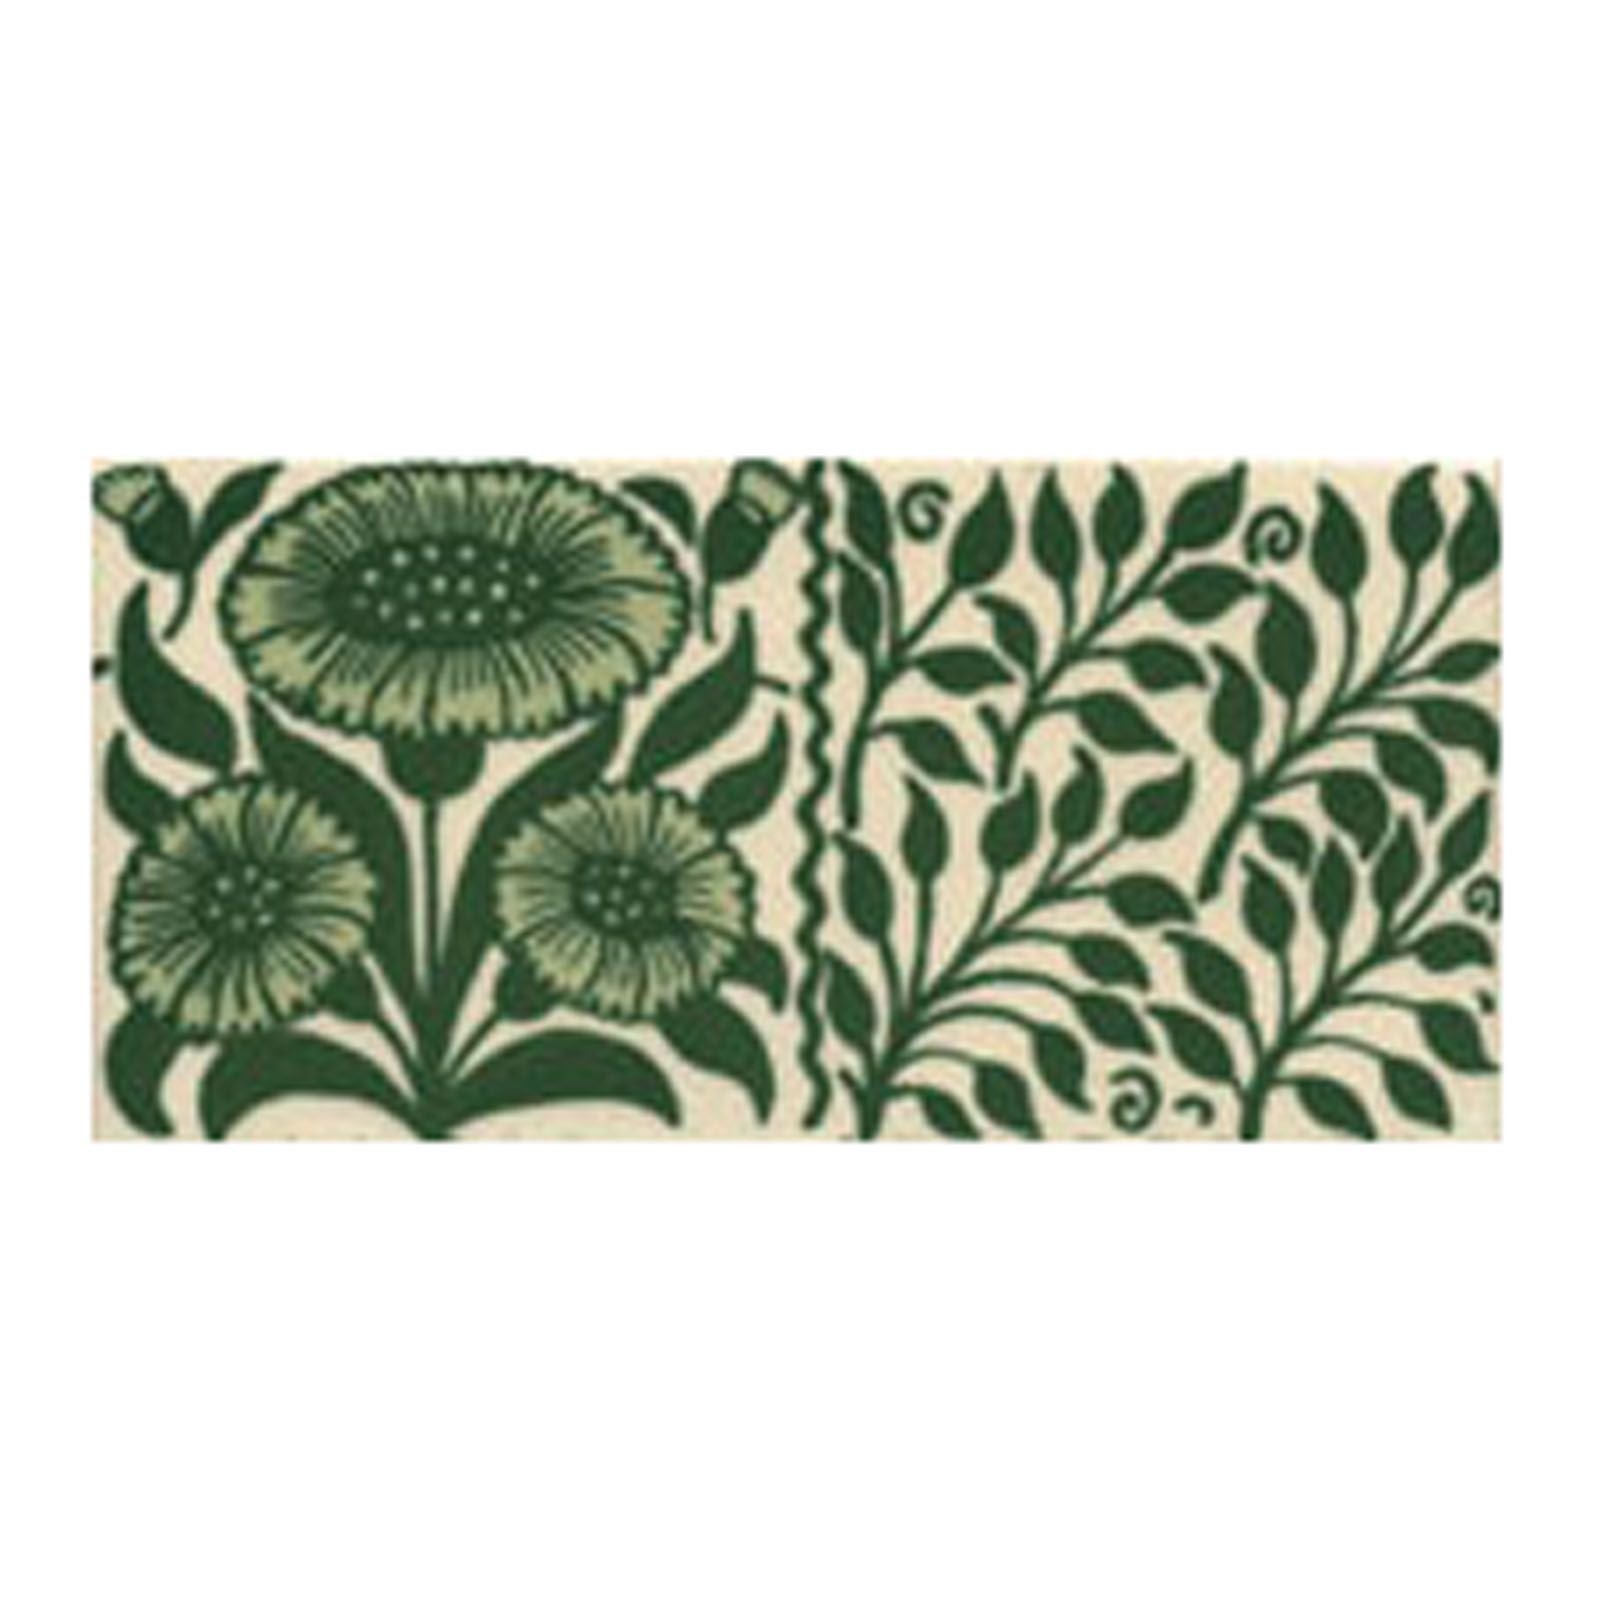 Victorian Oreton Border green decorative tiles 75x152mm